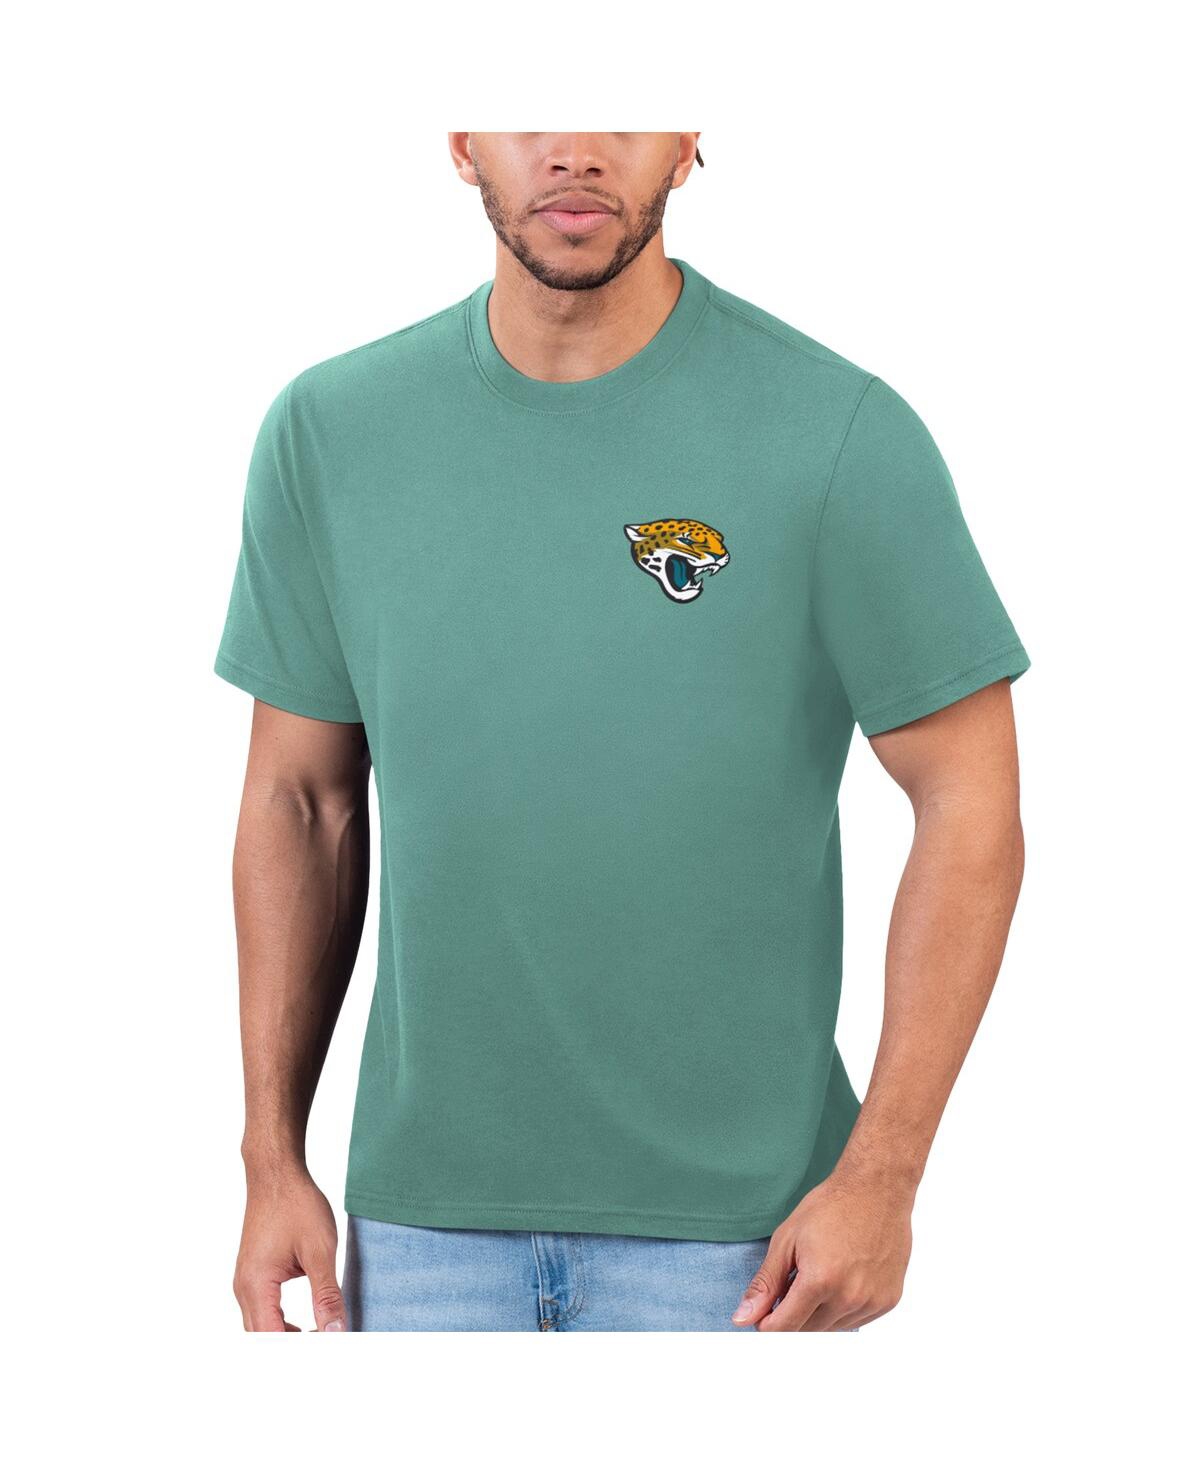 Men's Margaritaville Mint Jacksonville Jaguars T-shirt - Mint